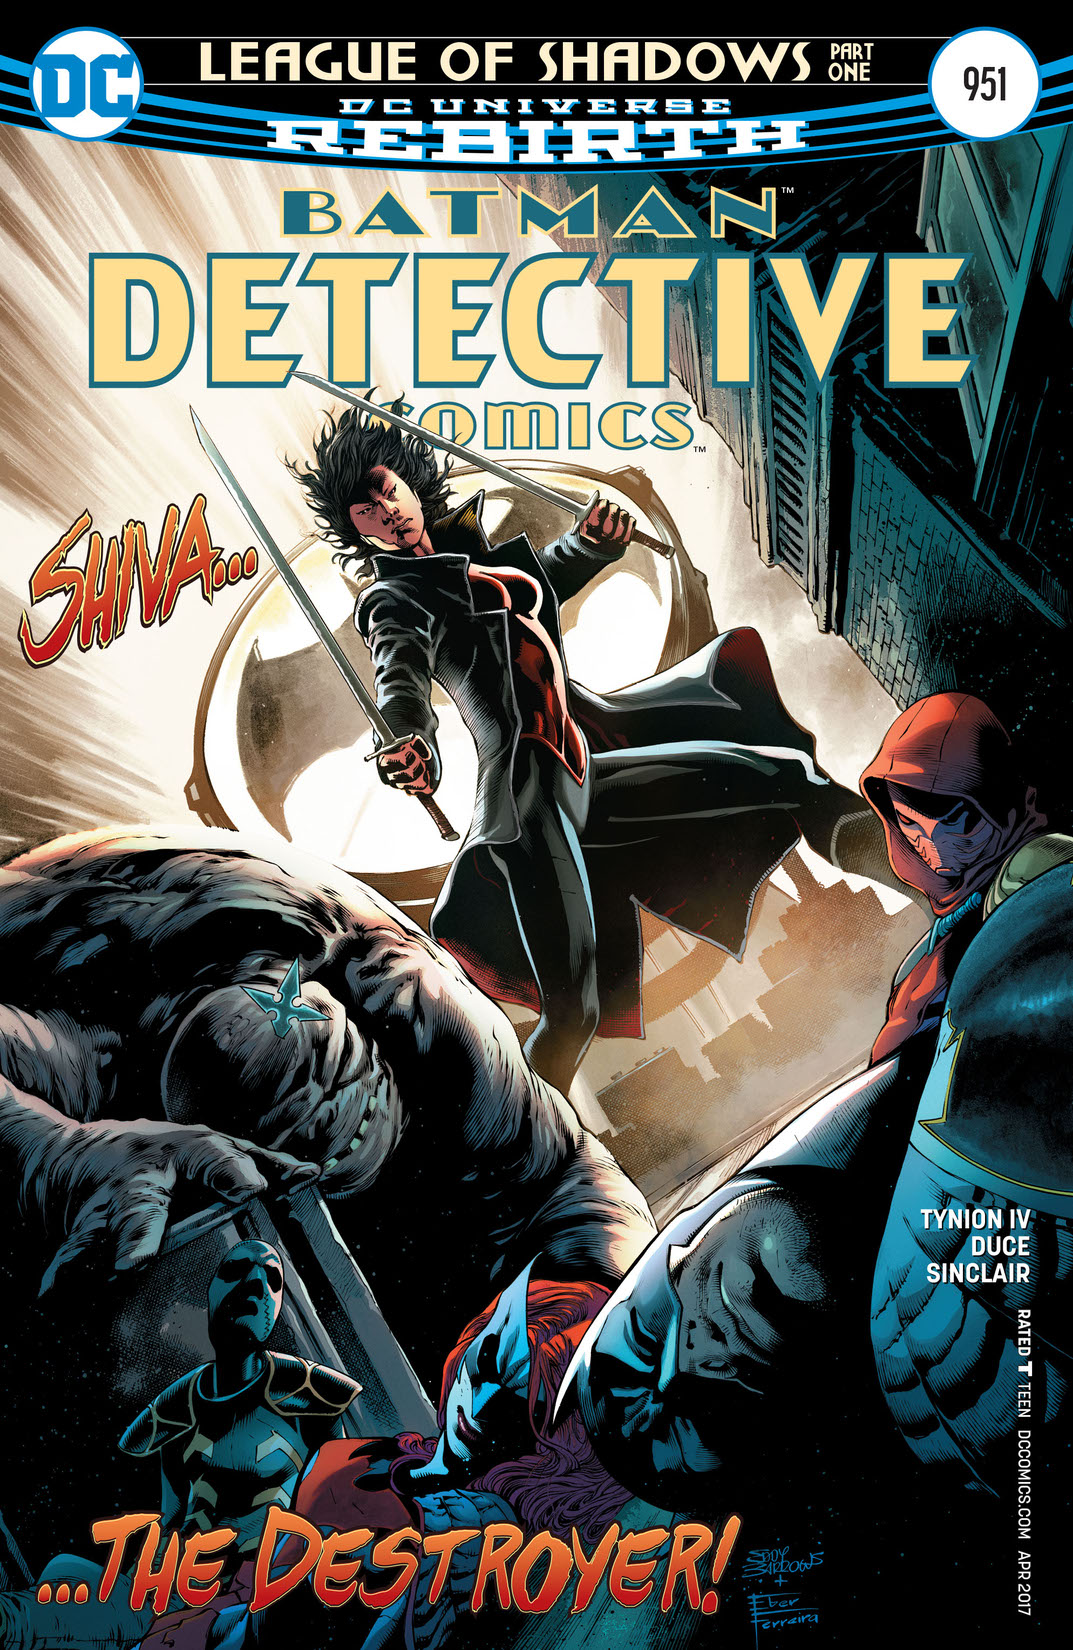 Detective Comics (2016-) #951 preview images